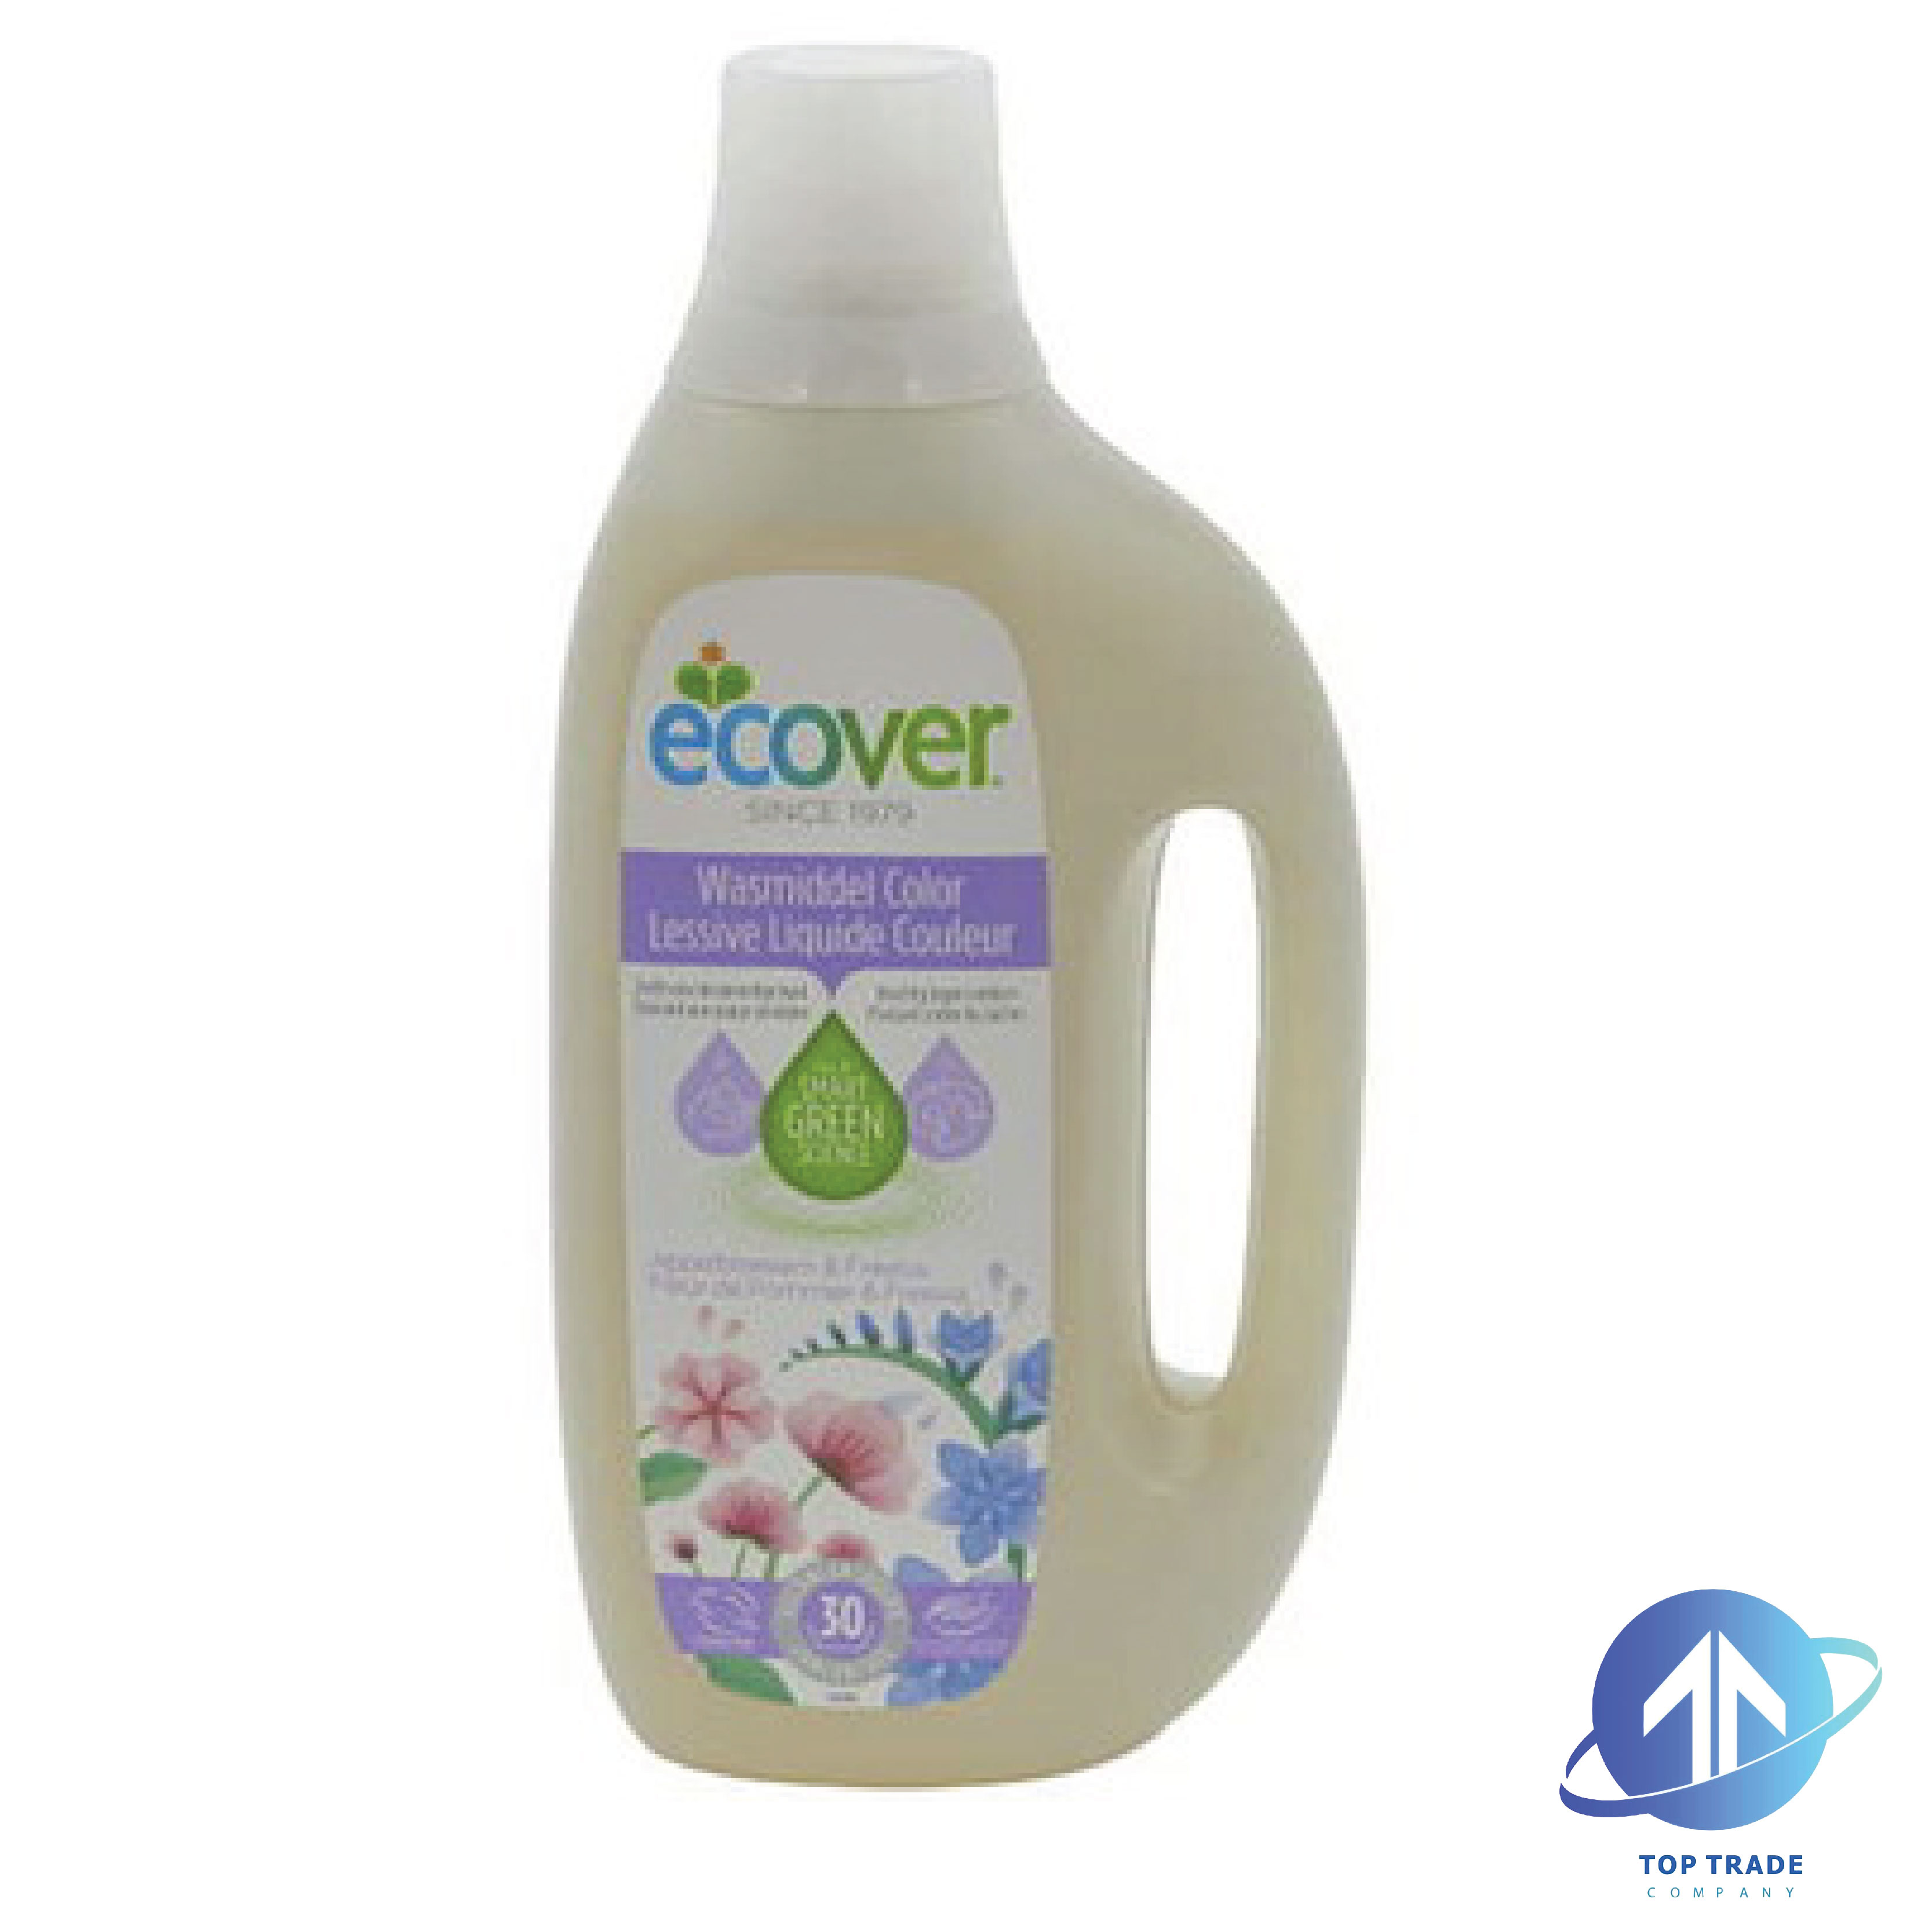 Ecover liquid detergent Colour Apple Blossom & Freesia 1,5L/30sc